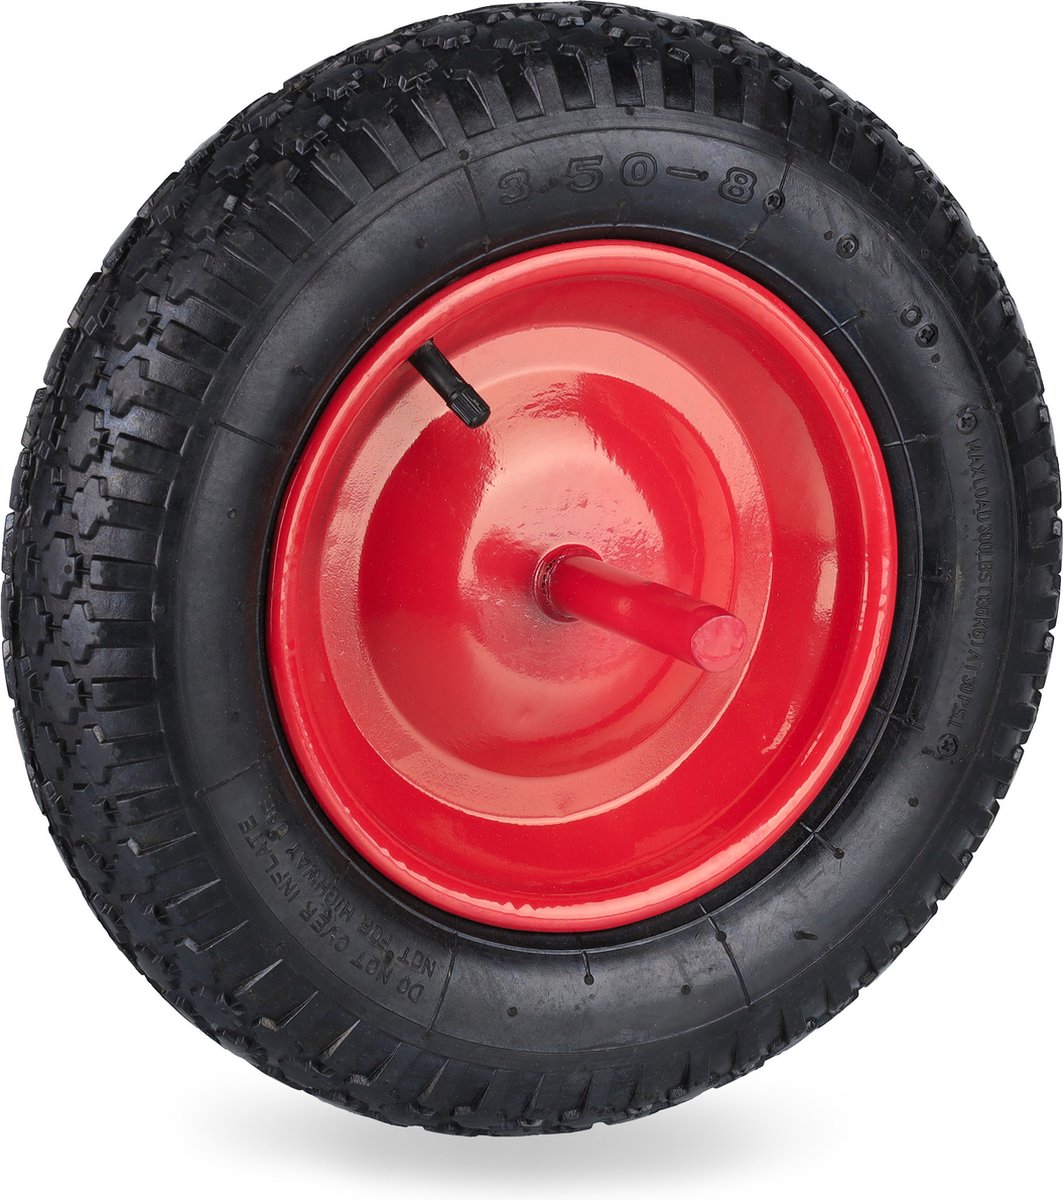 Relaxdays kruiwagenwiel as - 3.50-8 - luchtband - zwart rood - met as - kruiwagenband - Relaxdays